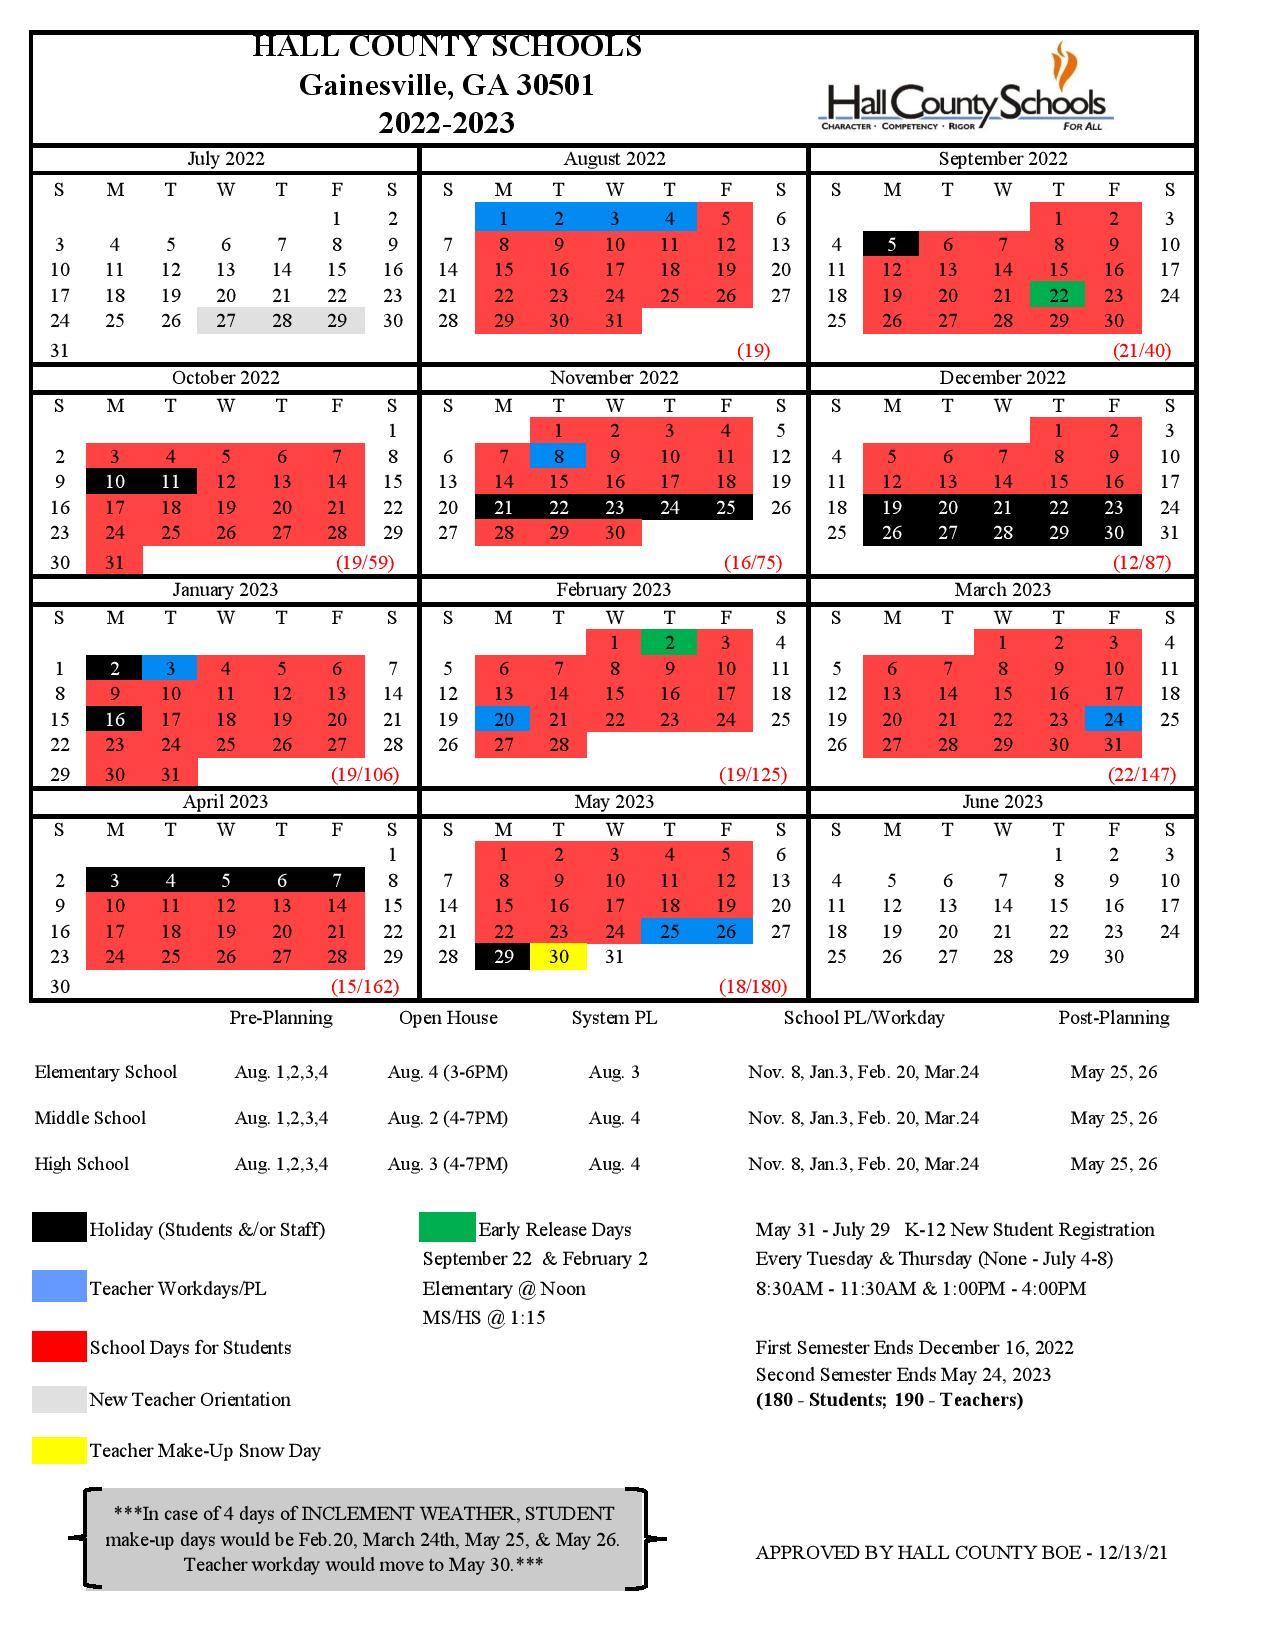 hall-county-schools-calendar-2022-2023-holidays